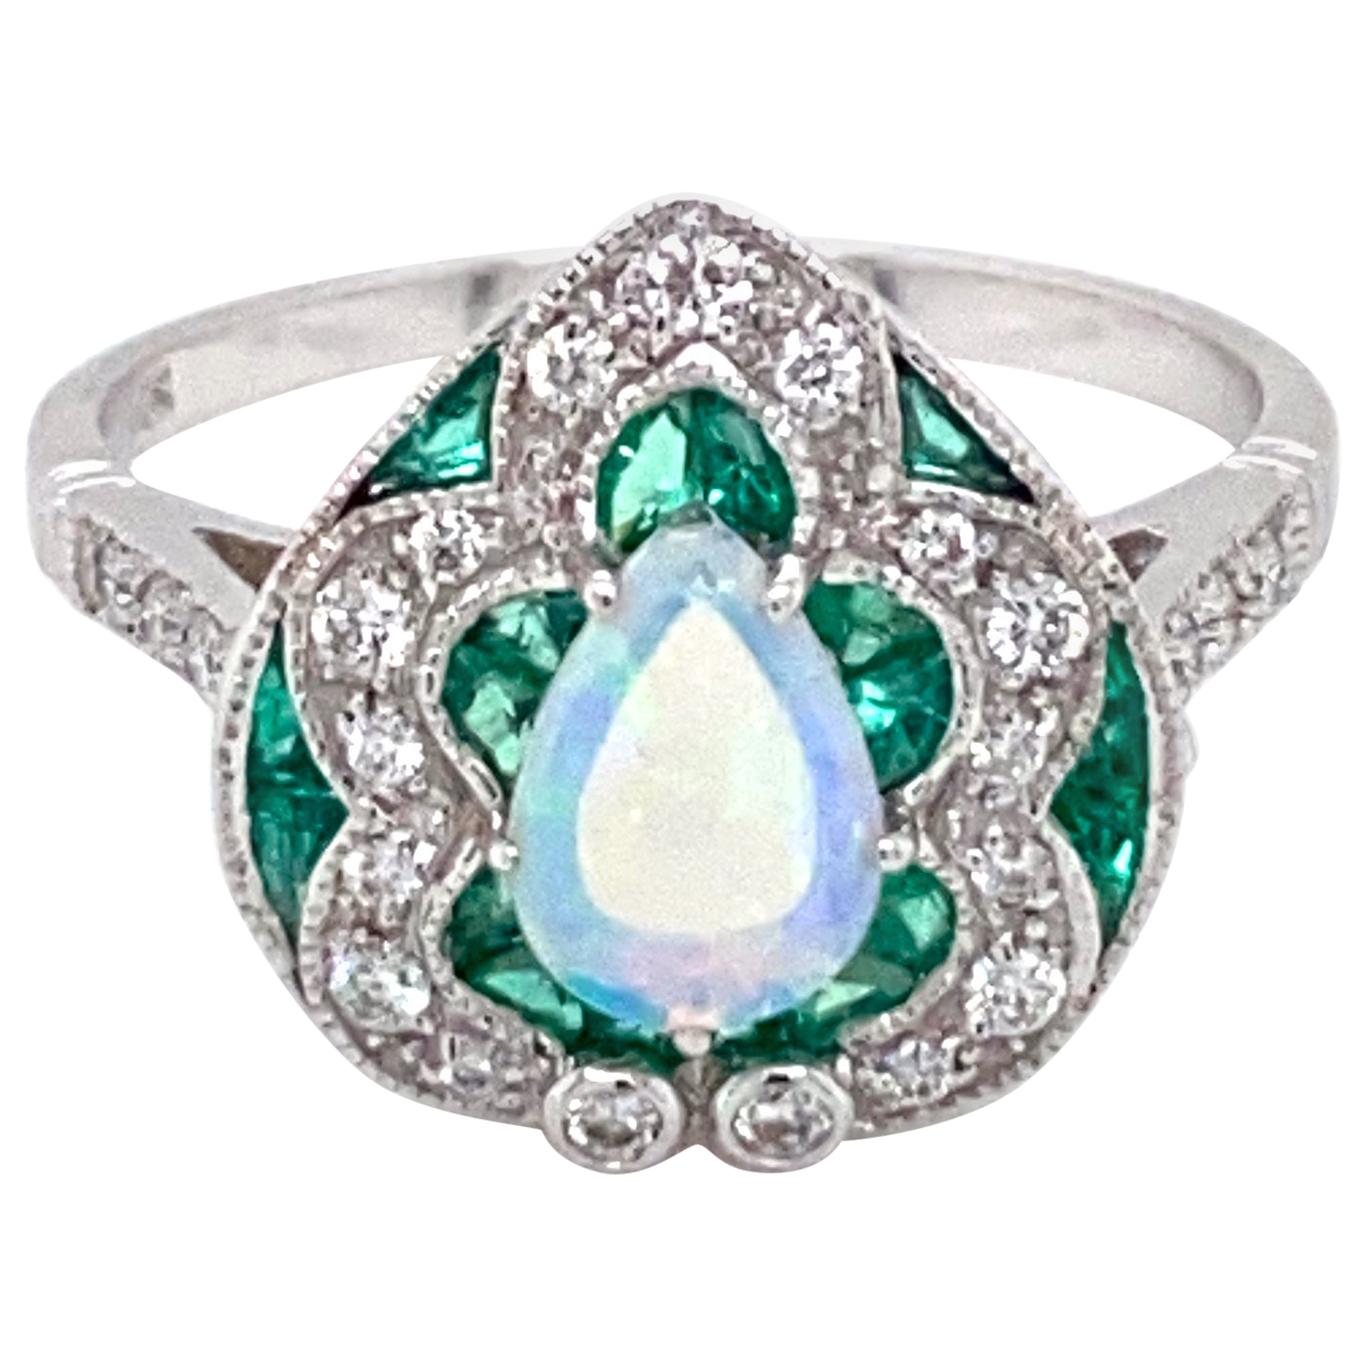 Art Deco Style Opal Diamond Emerald Cocktail Ring Estate Fine Jewelry